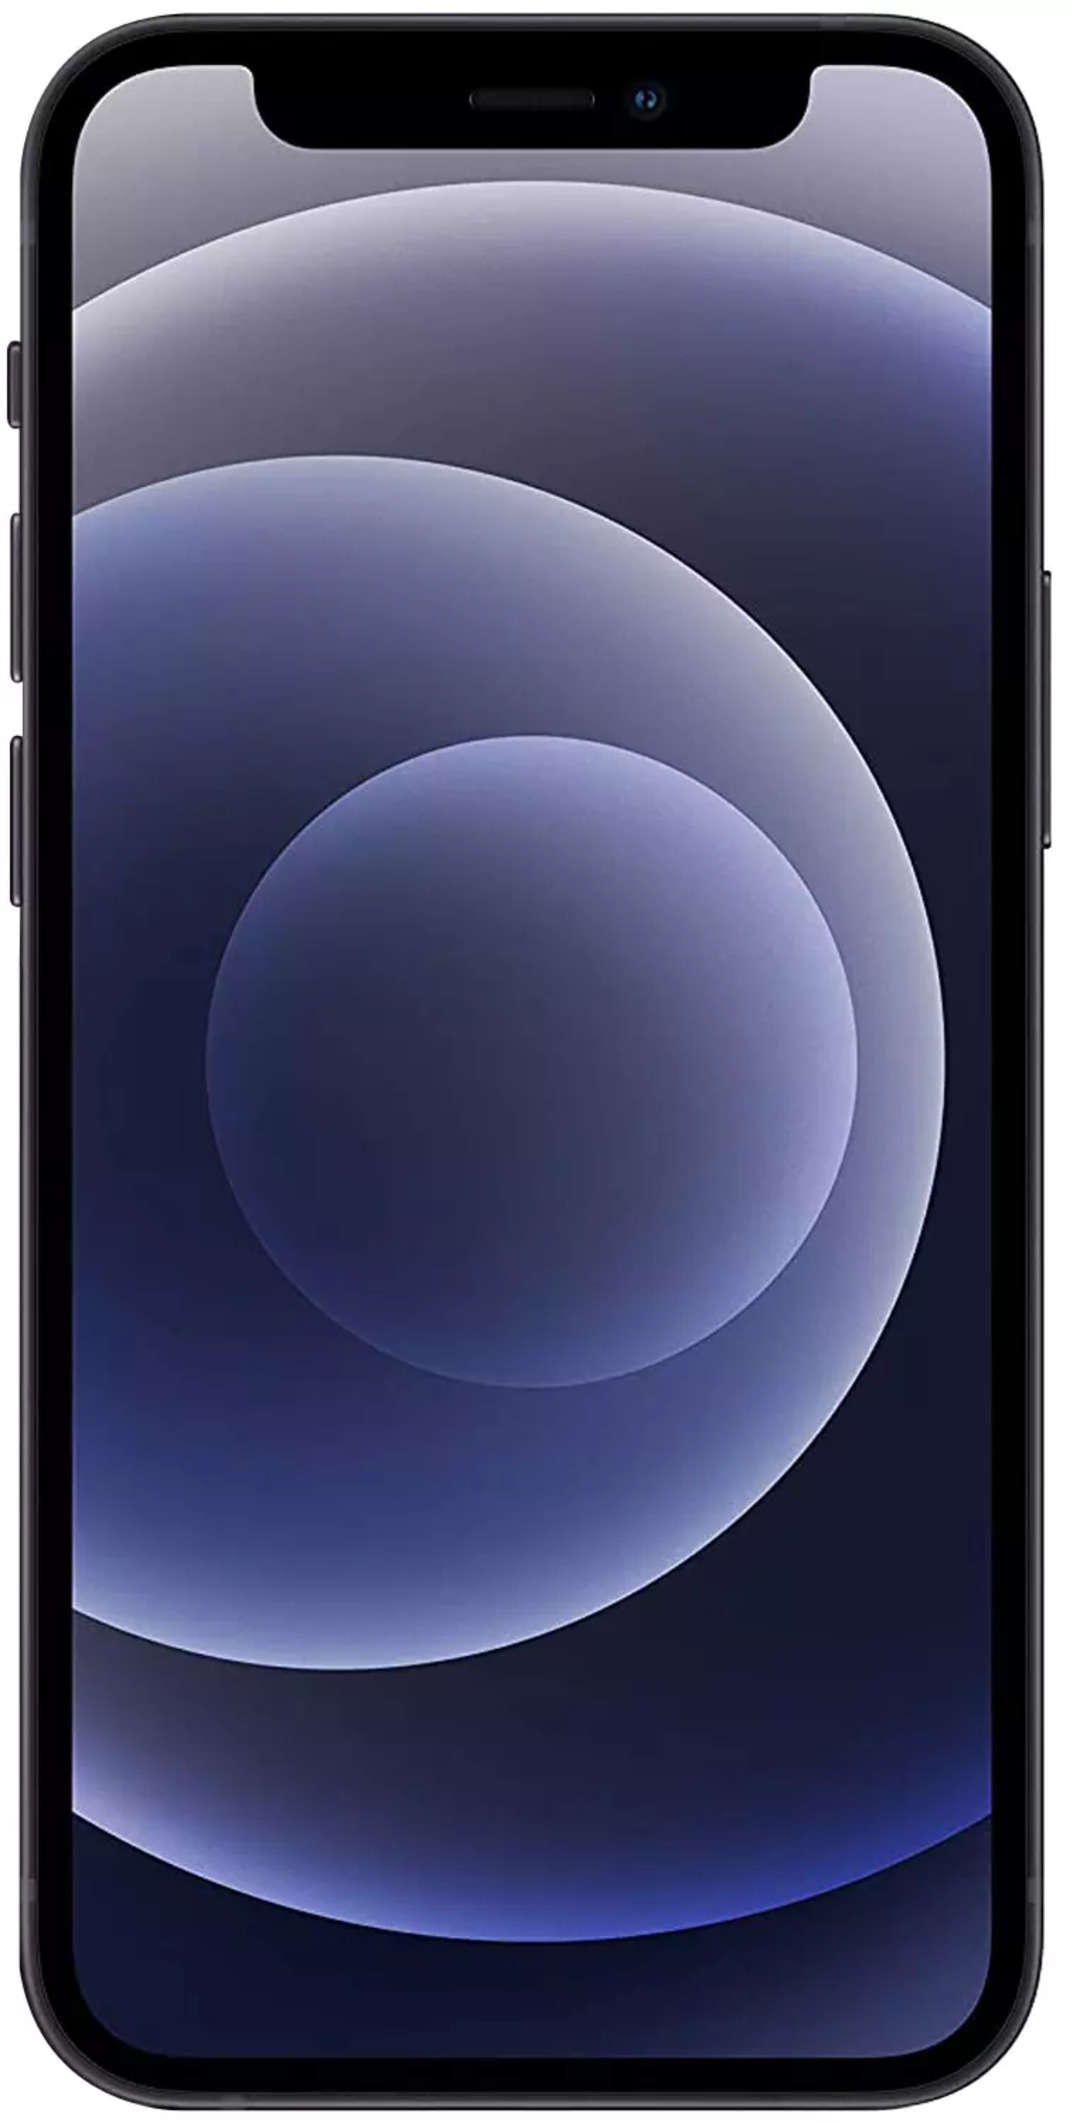 Compare Apple Iphone 12 Mini 128gb Vs Apple Iphone 7 Plus Price Specs Review Gadgets Now